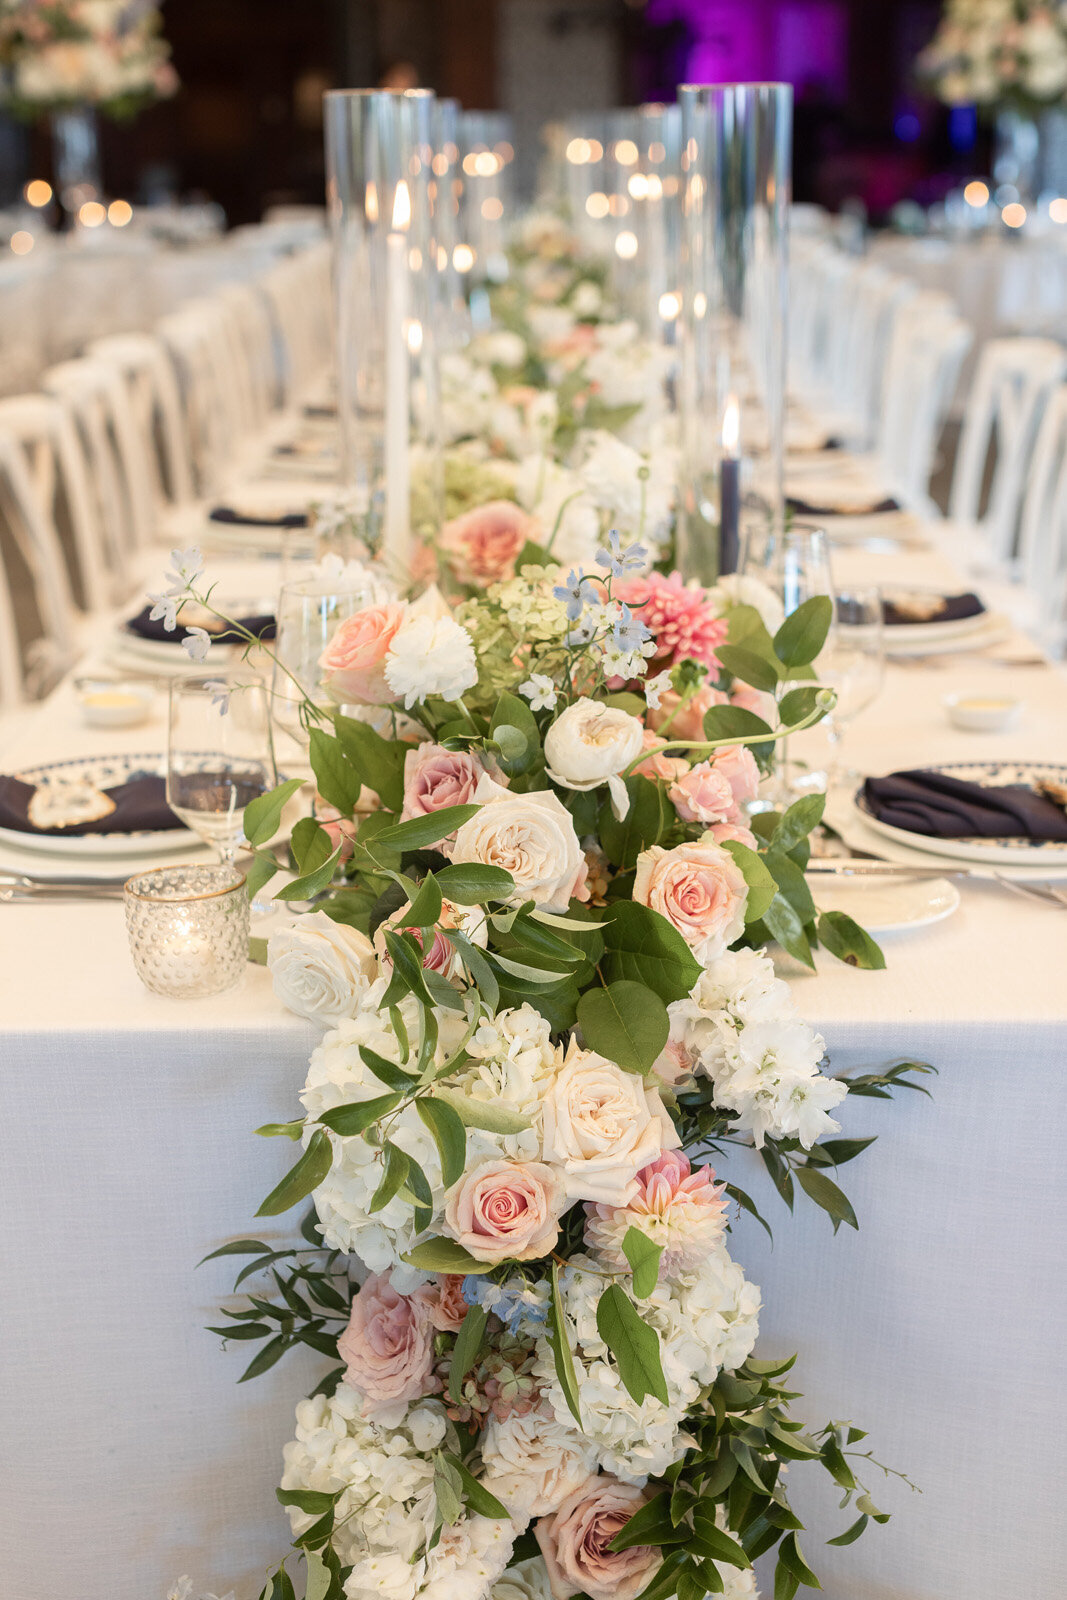 Kate-Murtaugh-Events-Newport-wedding-floral-garland-reception-centerpiece-tented-wedding-planner